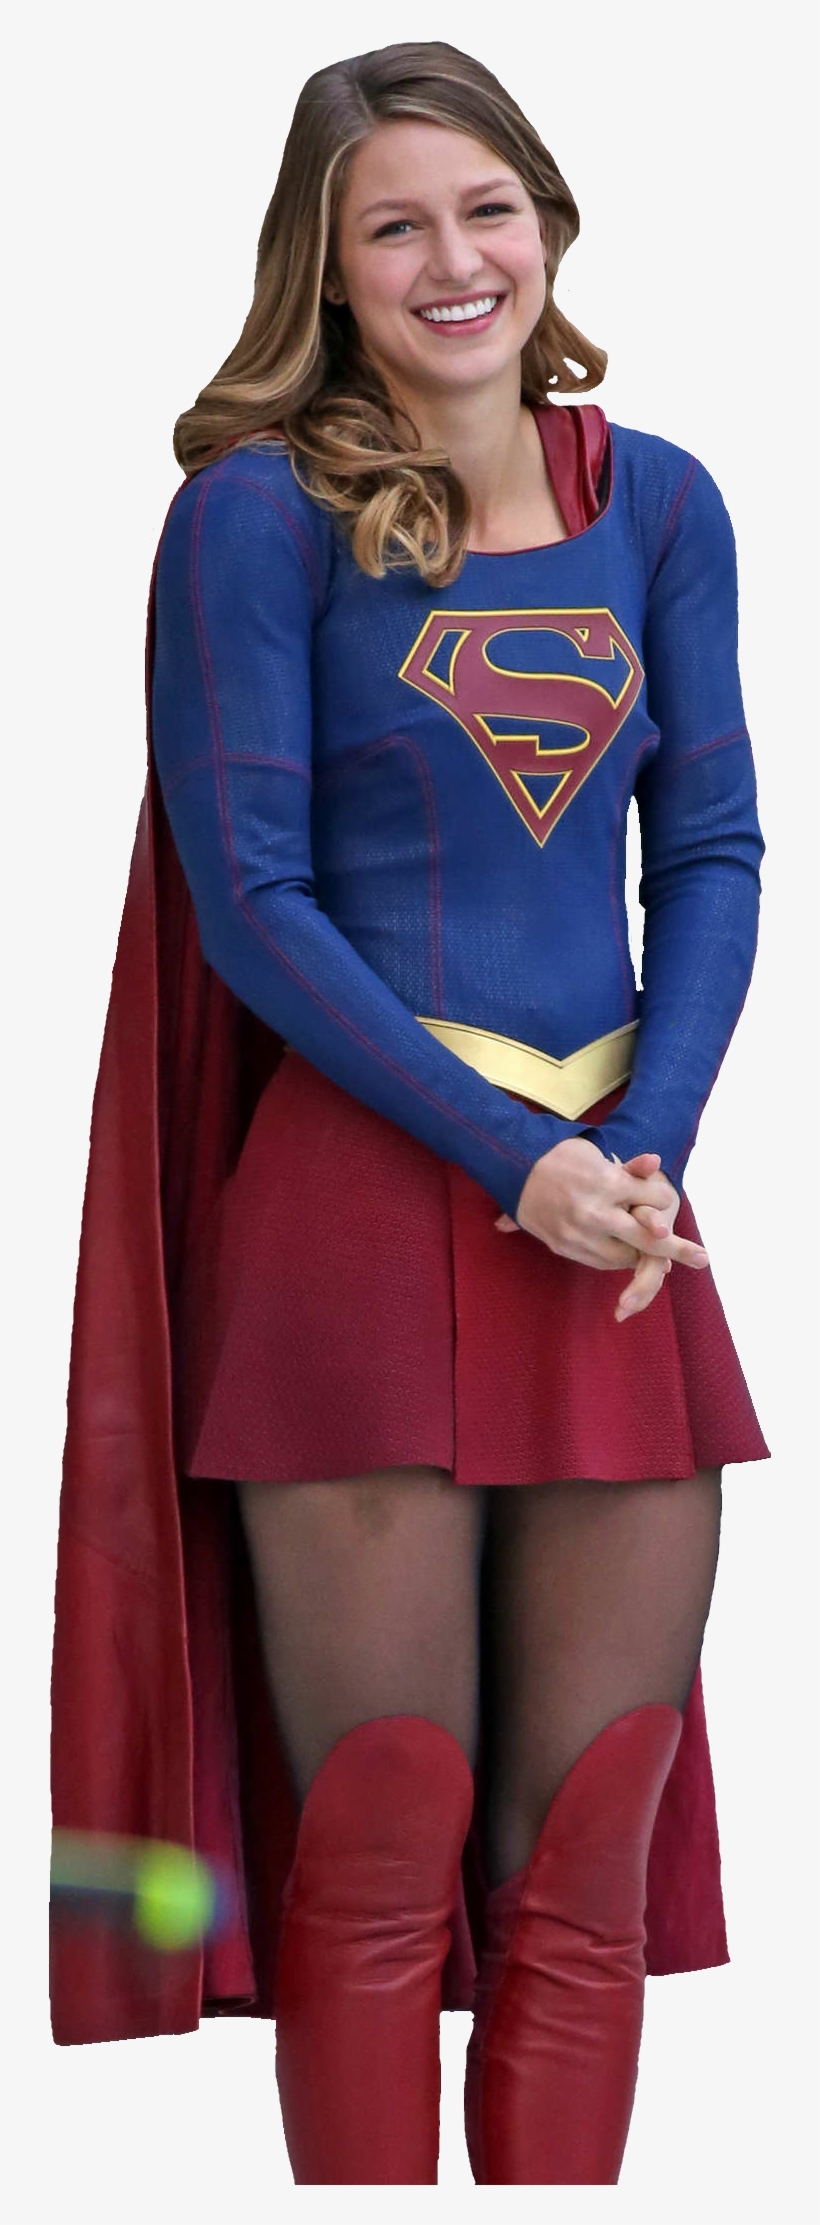 Supergirl Png, transparent png #614093